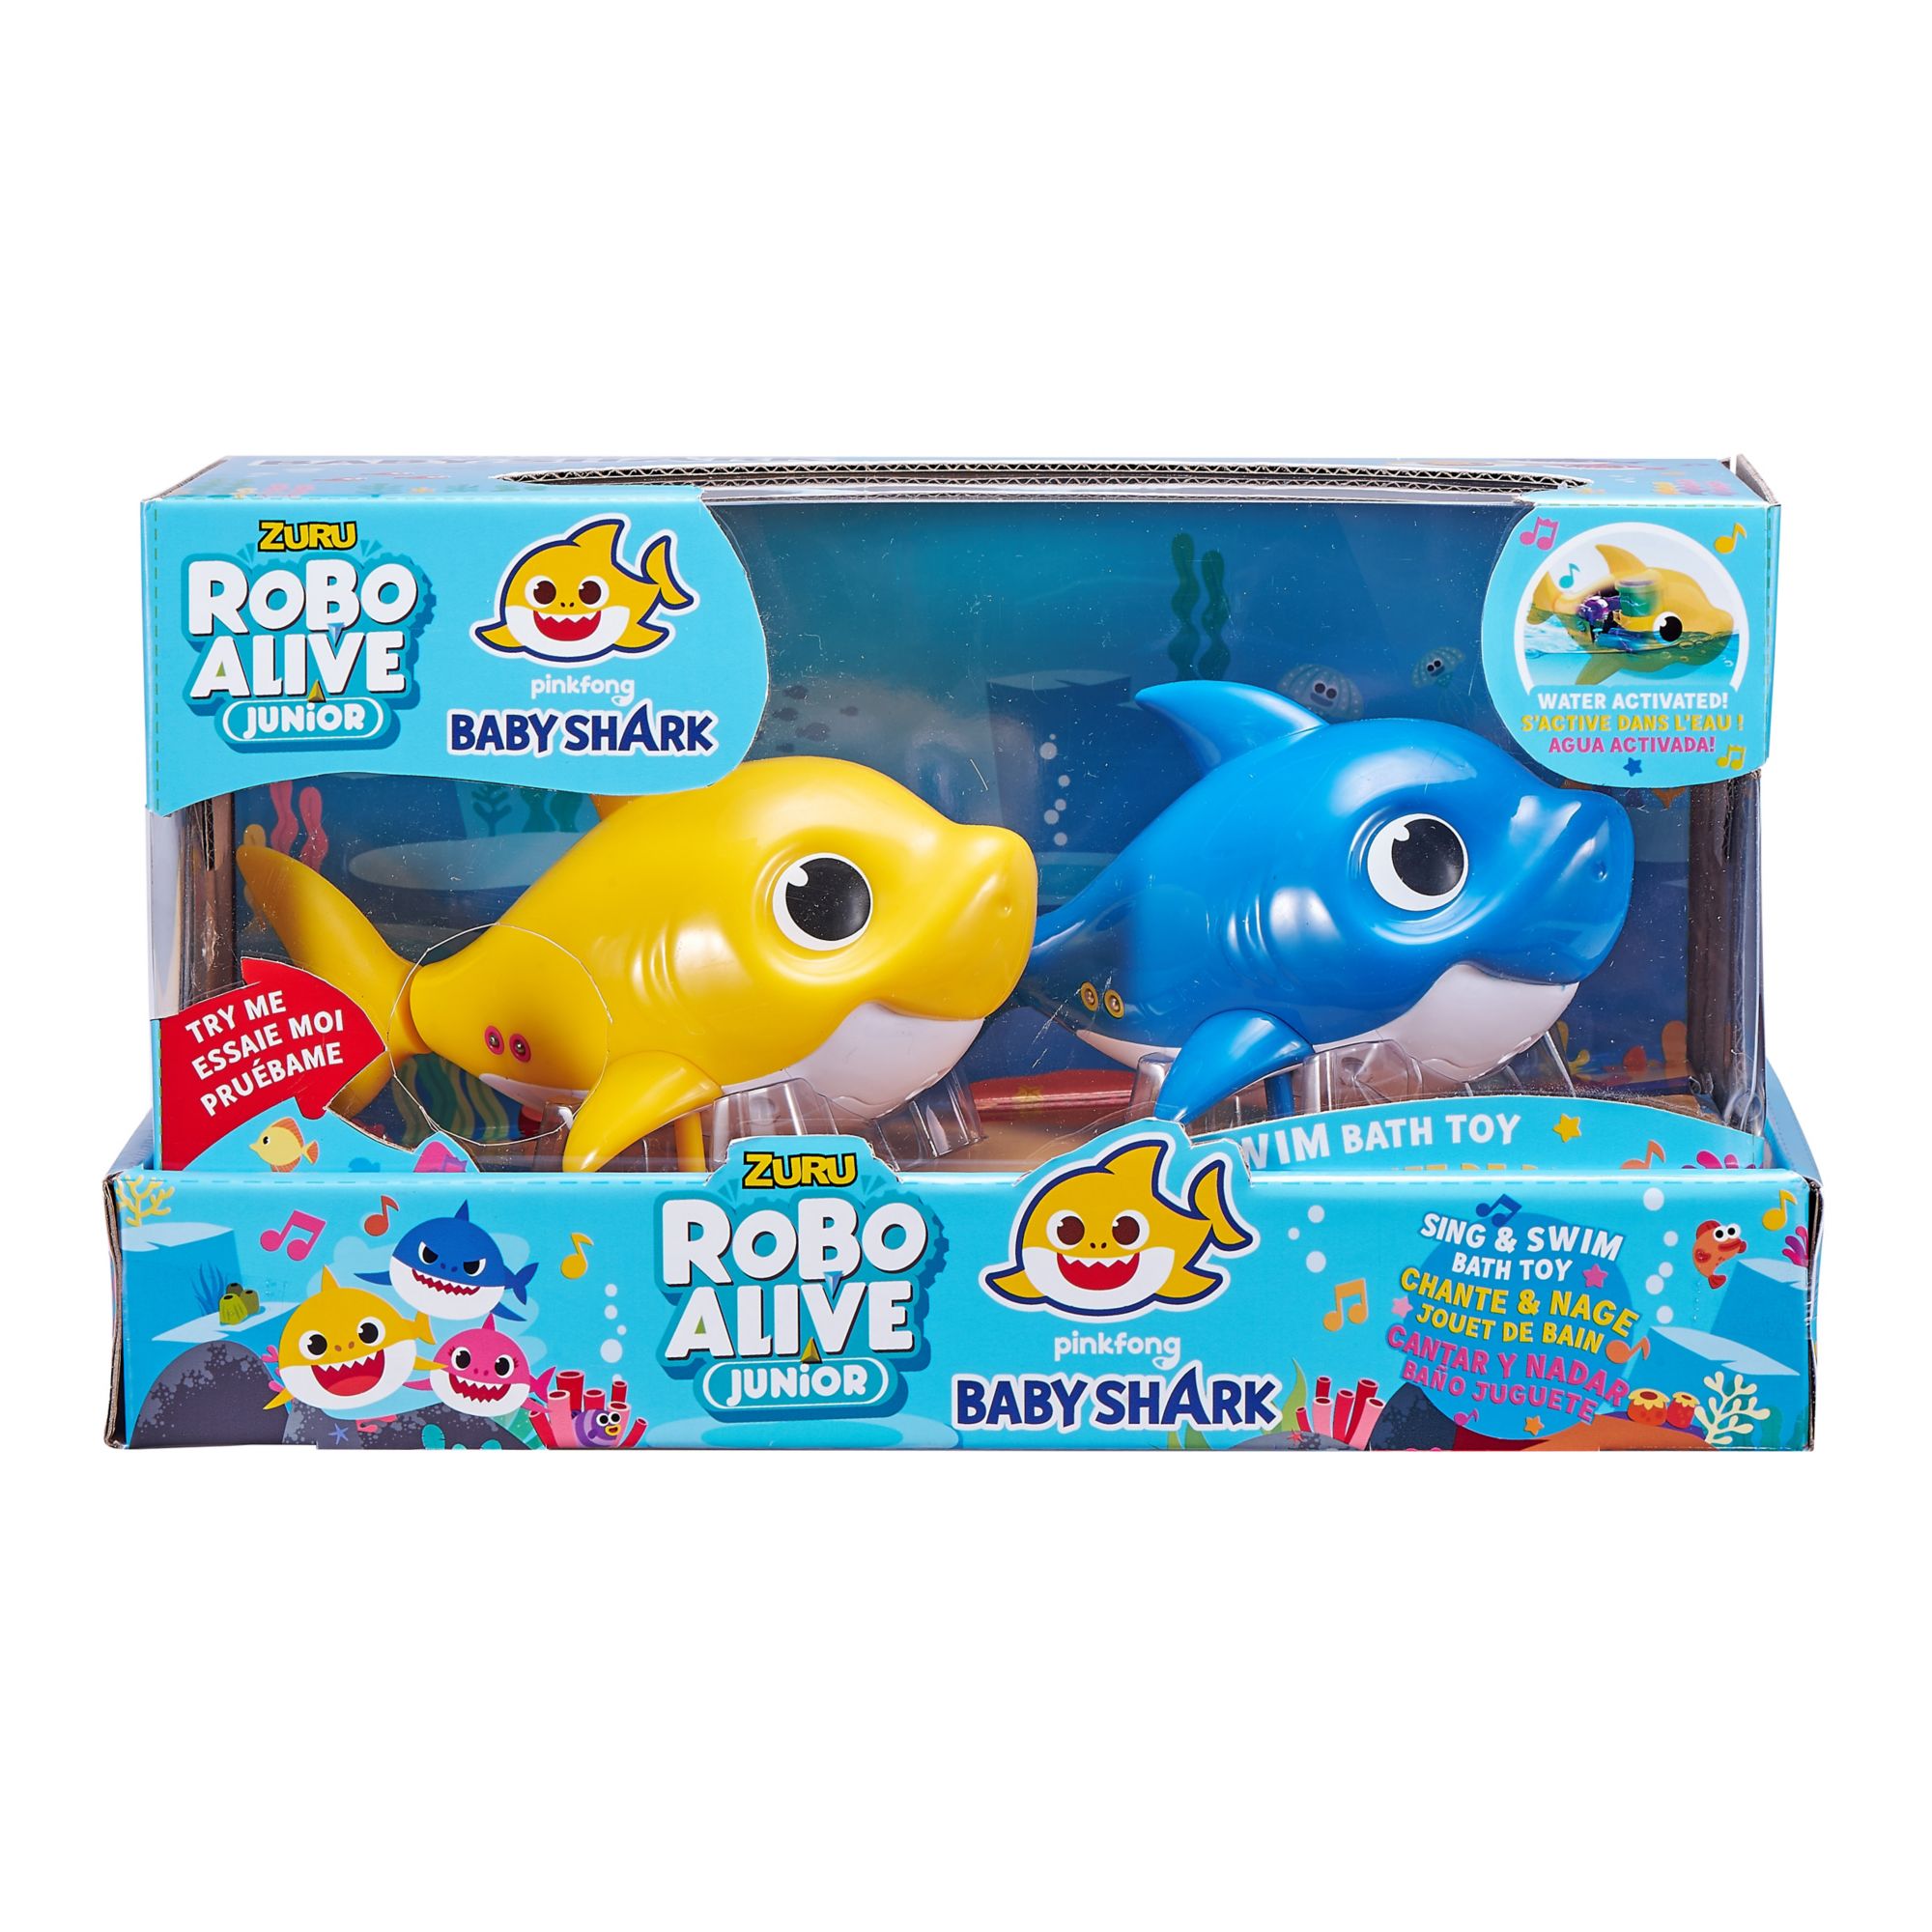 Zuru Robo Alive Junior Baby Shark, 2 pk. - Yellow and Blue